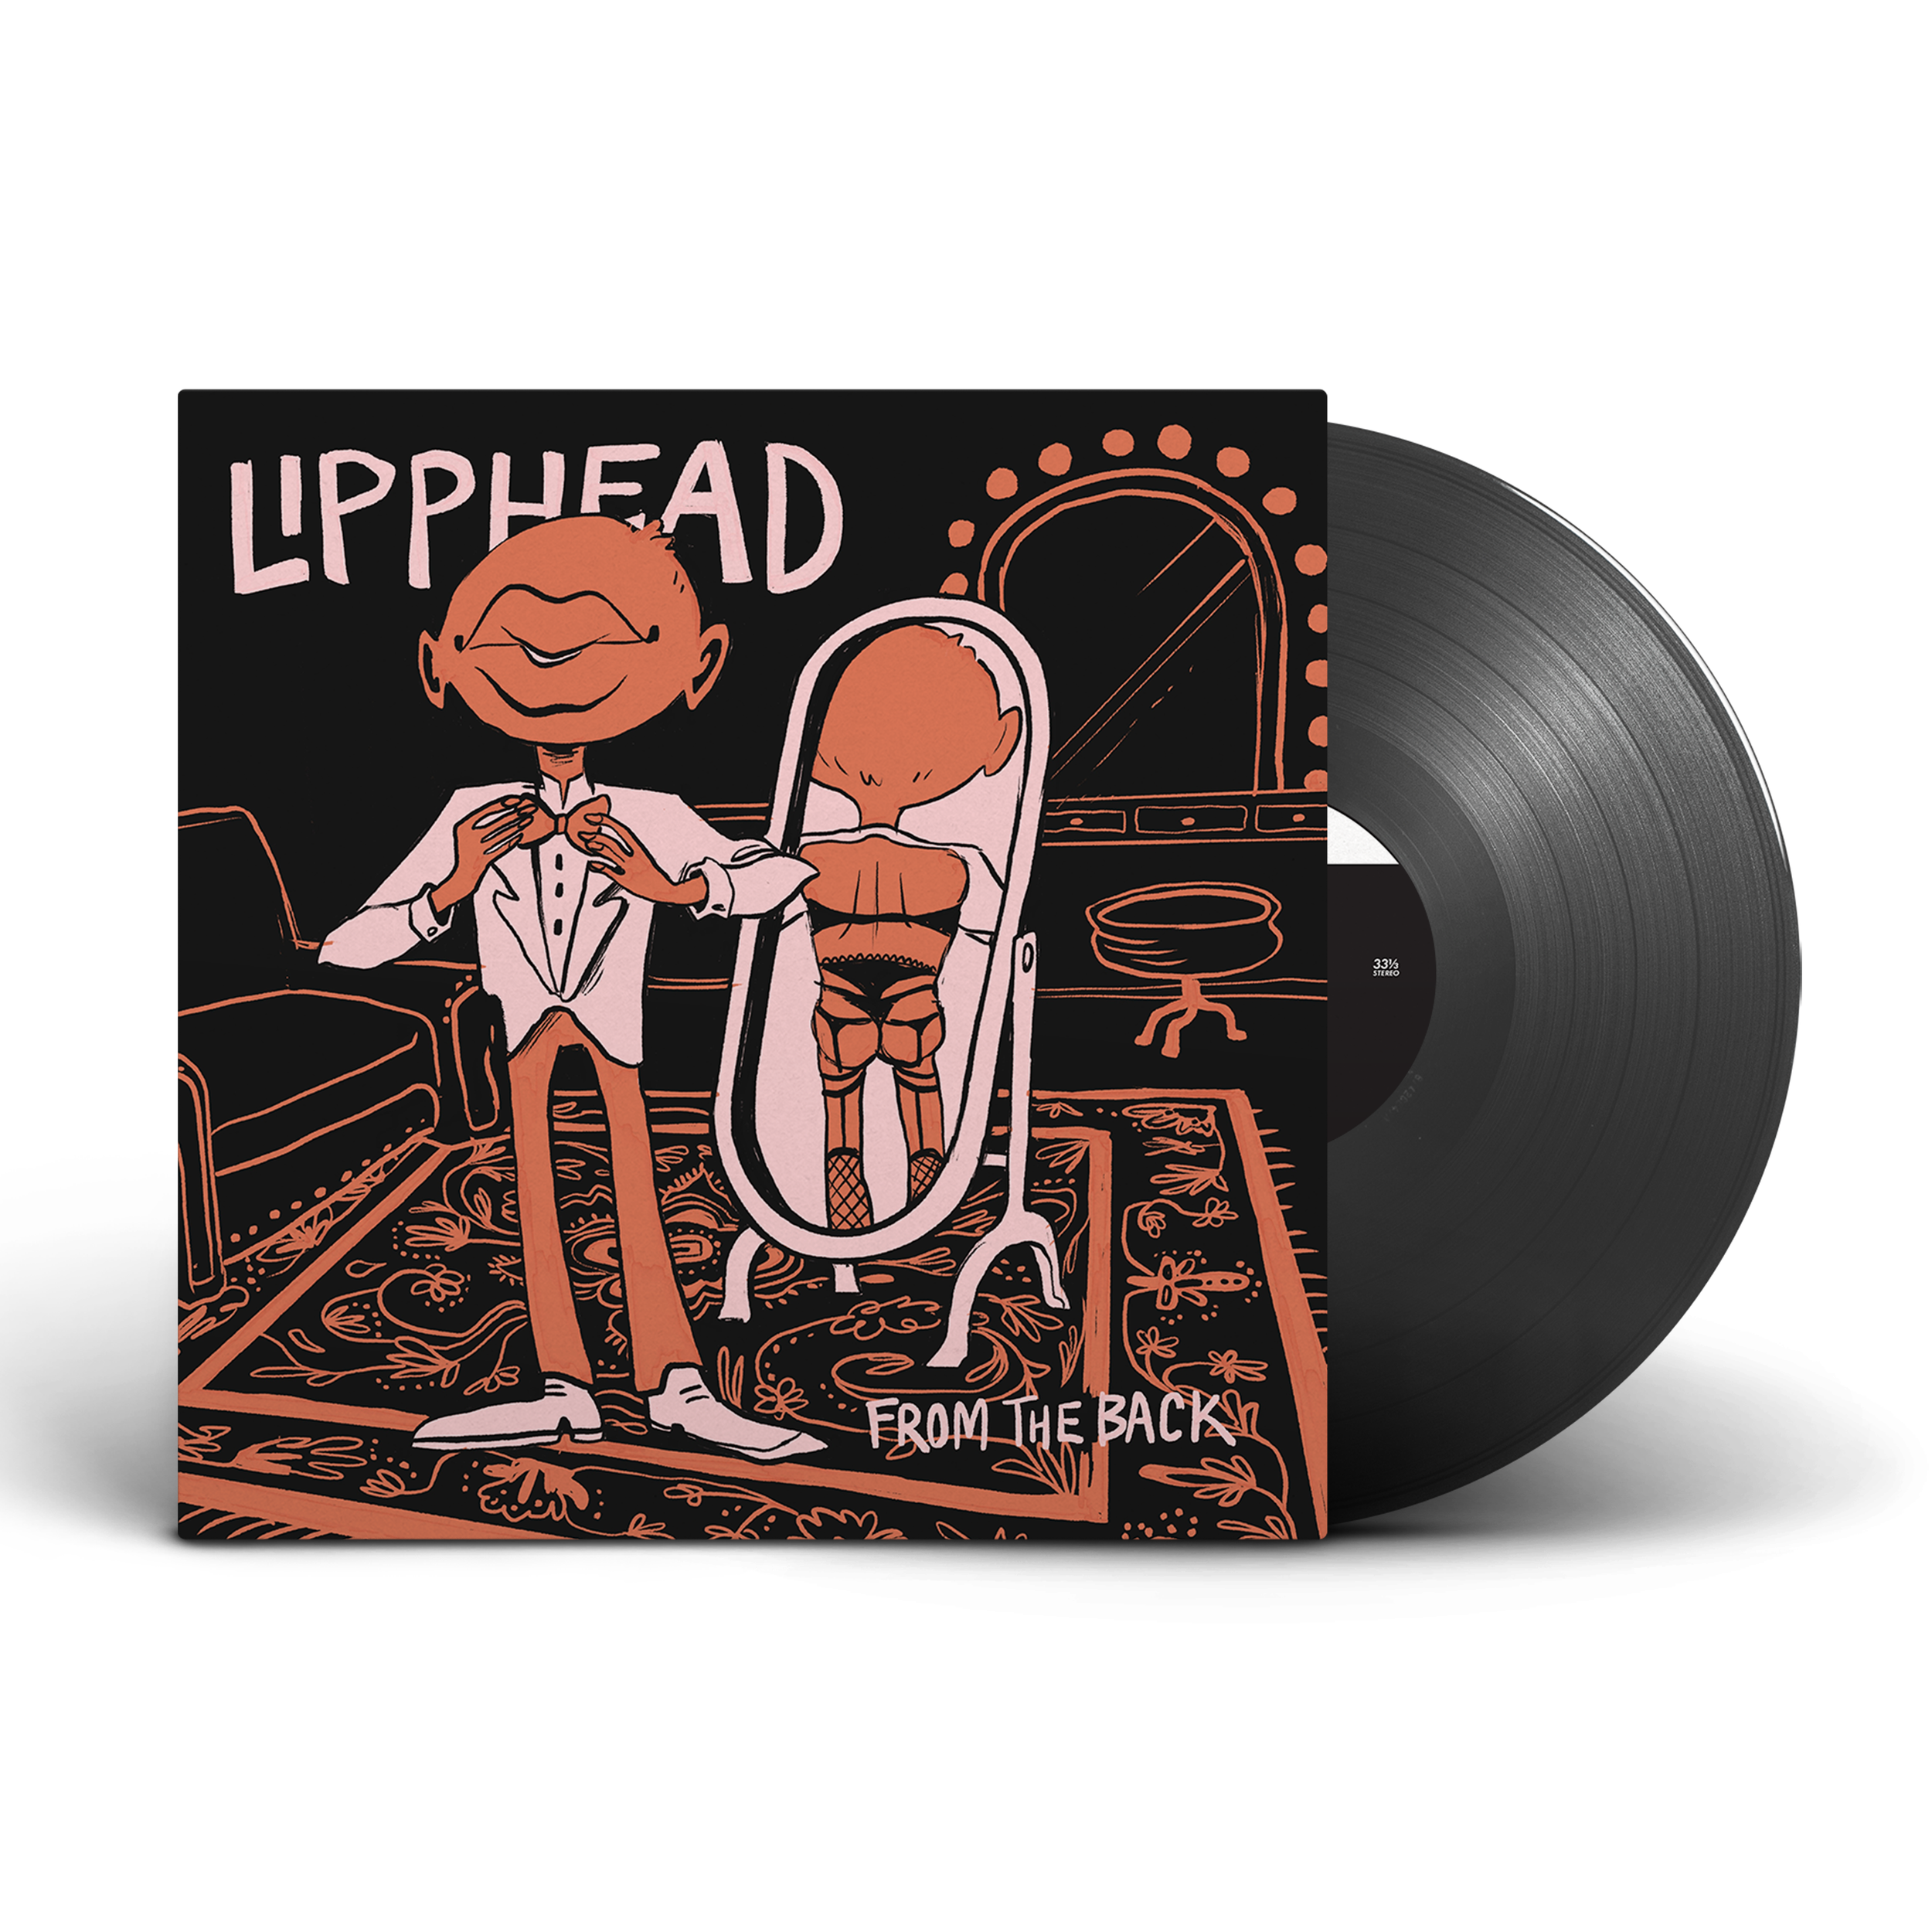 Lipphead - From The Back (Vinyl - Black) – $20.00